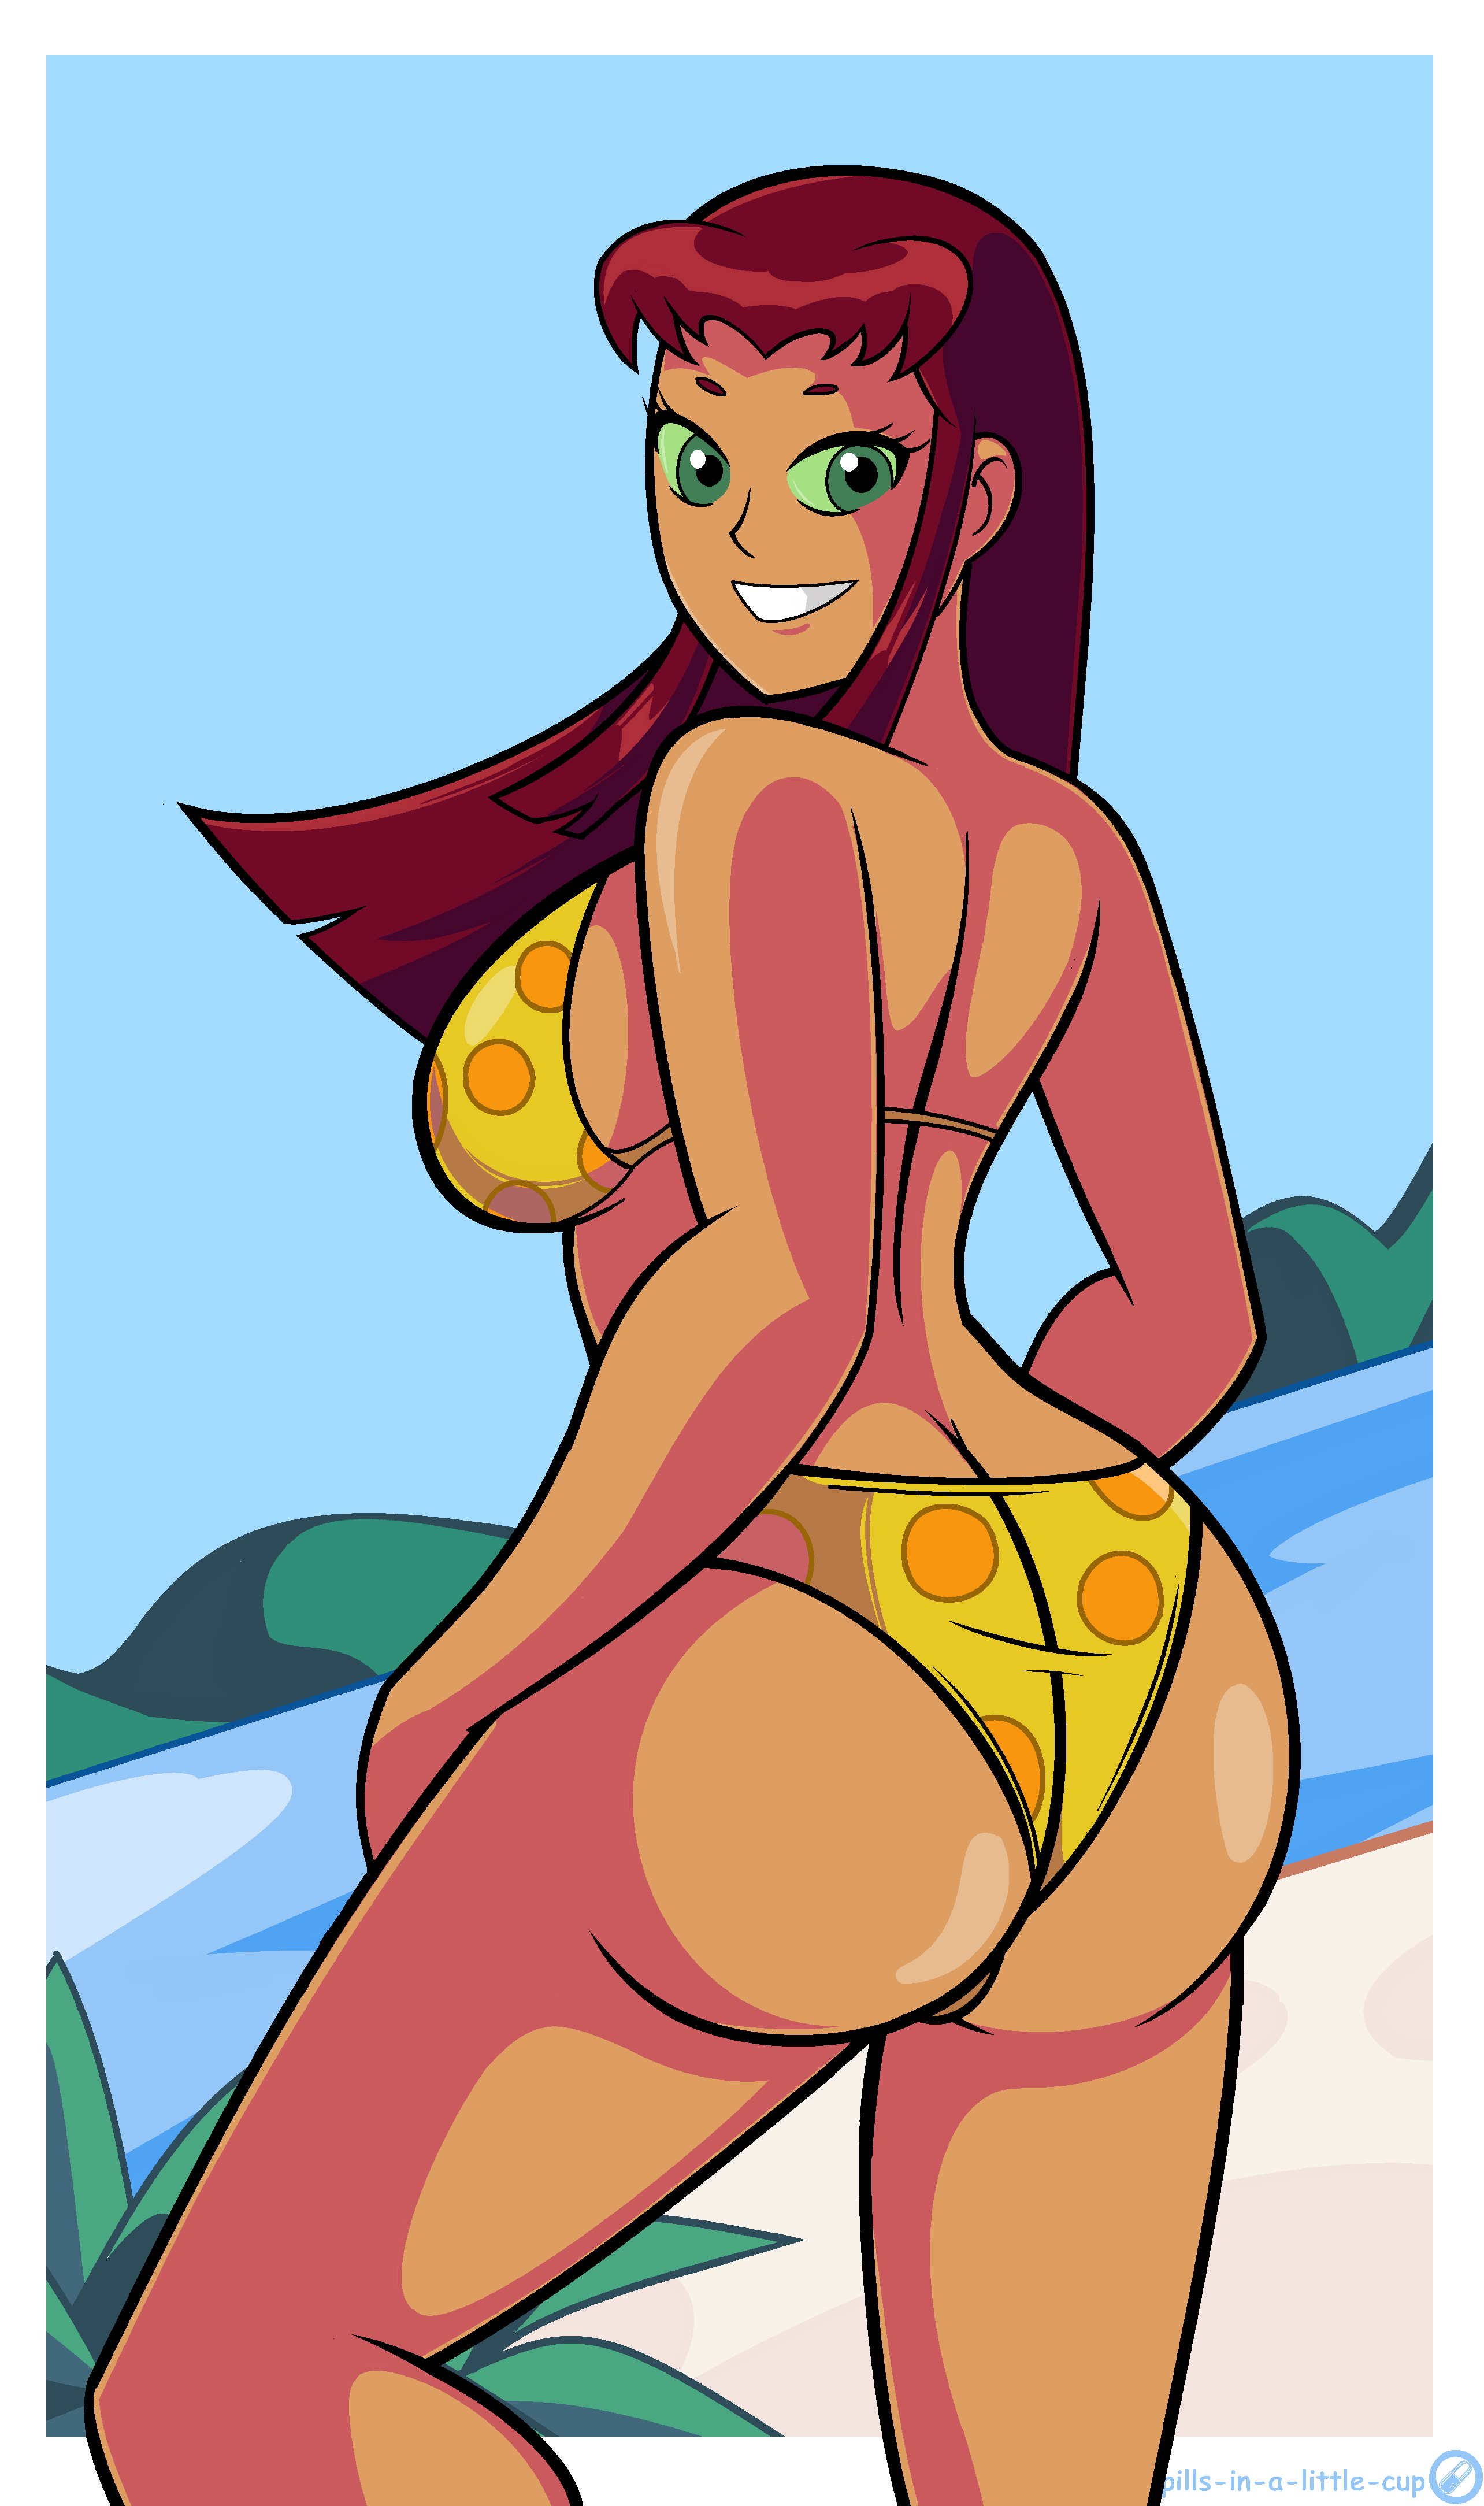 Starfire in a bikini